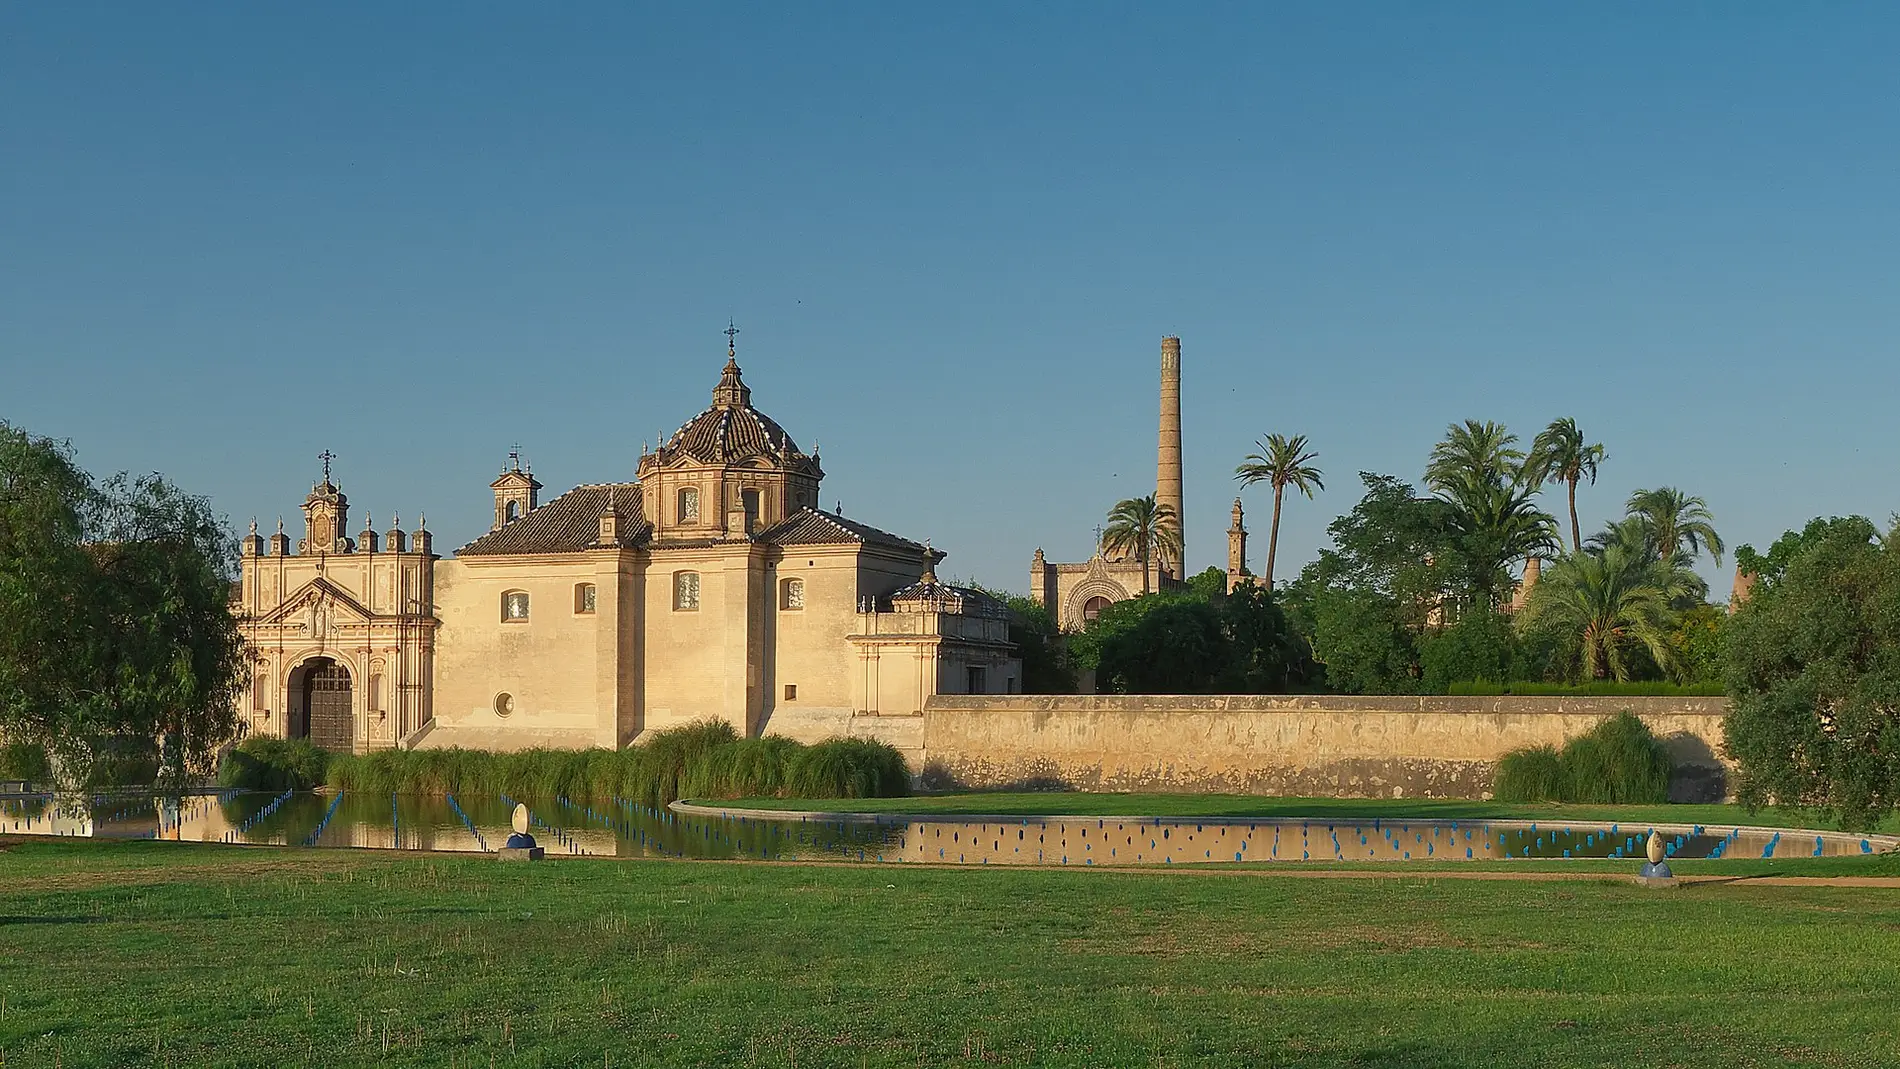 Monasterio de la Cartuja de Sevilla